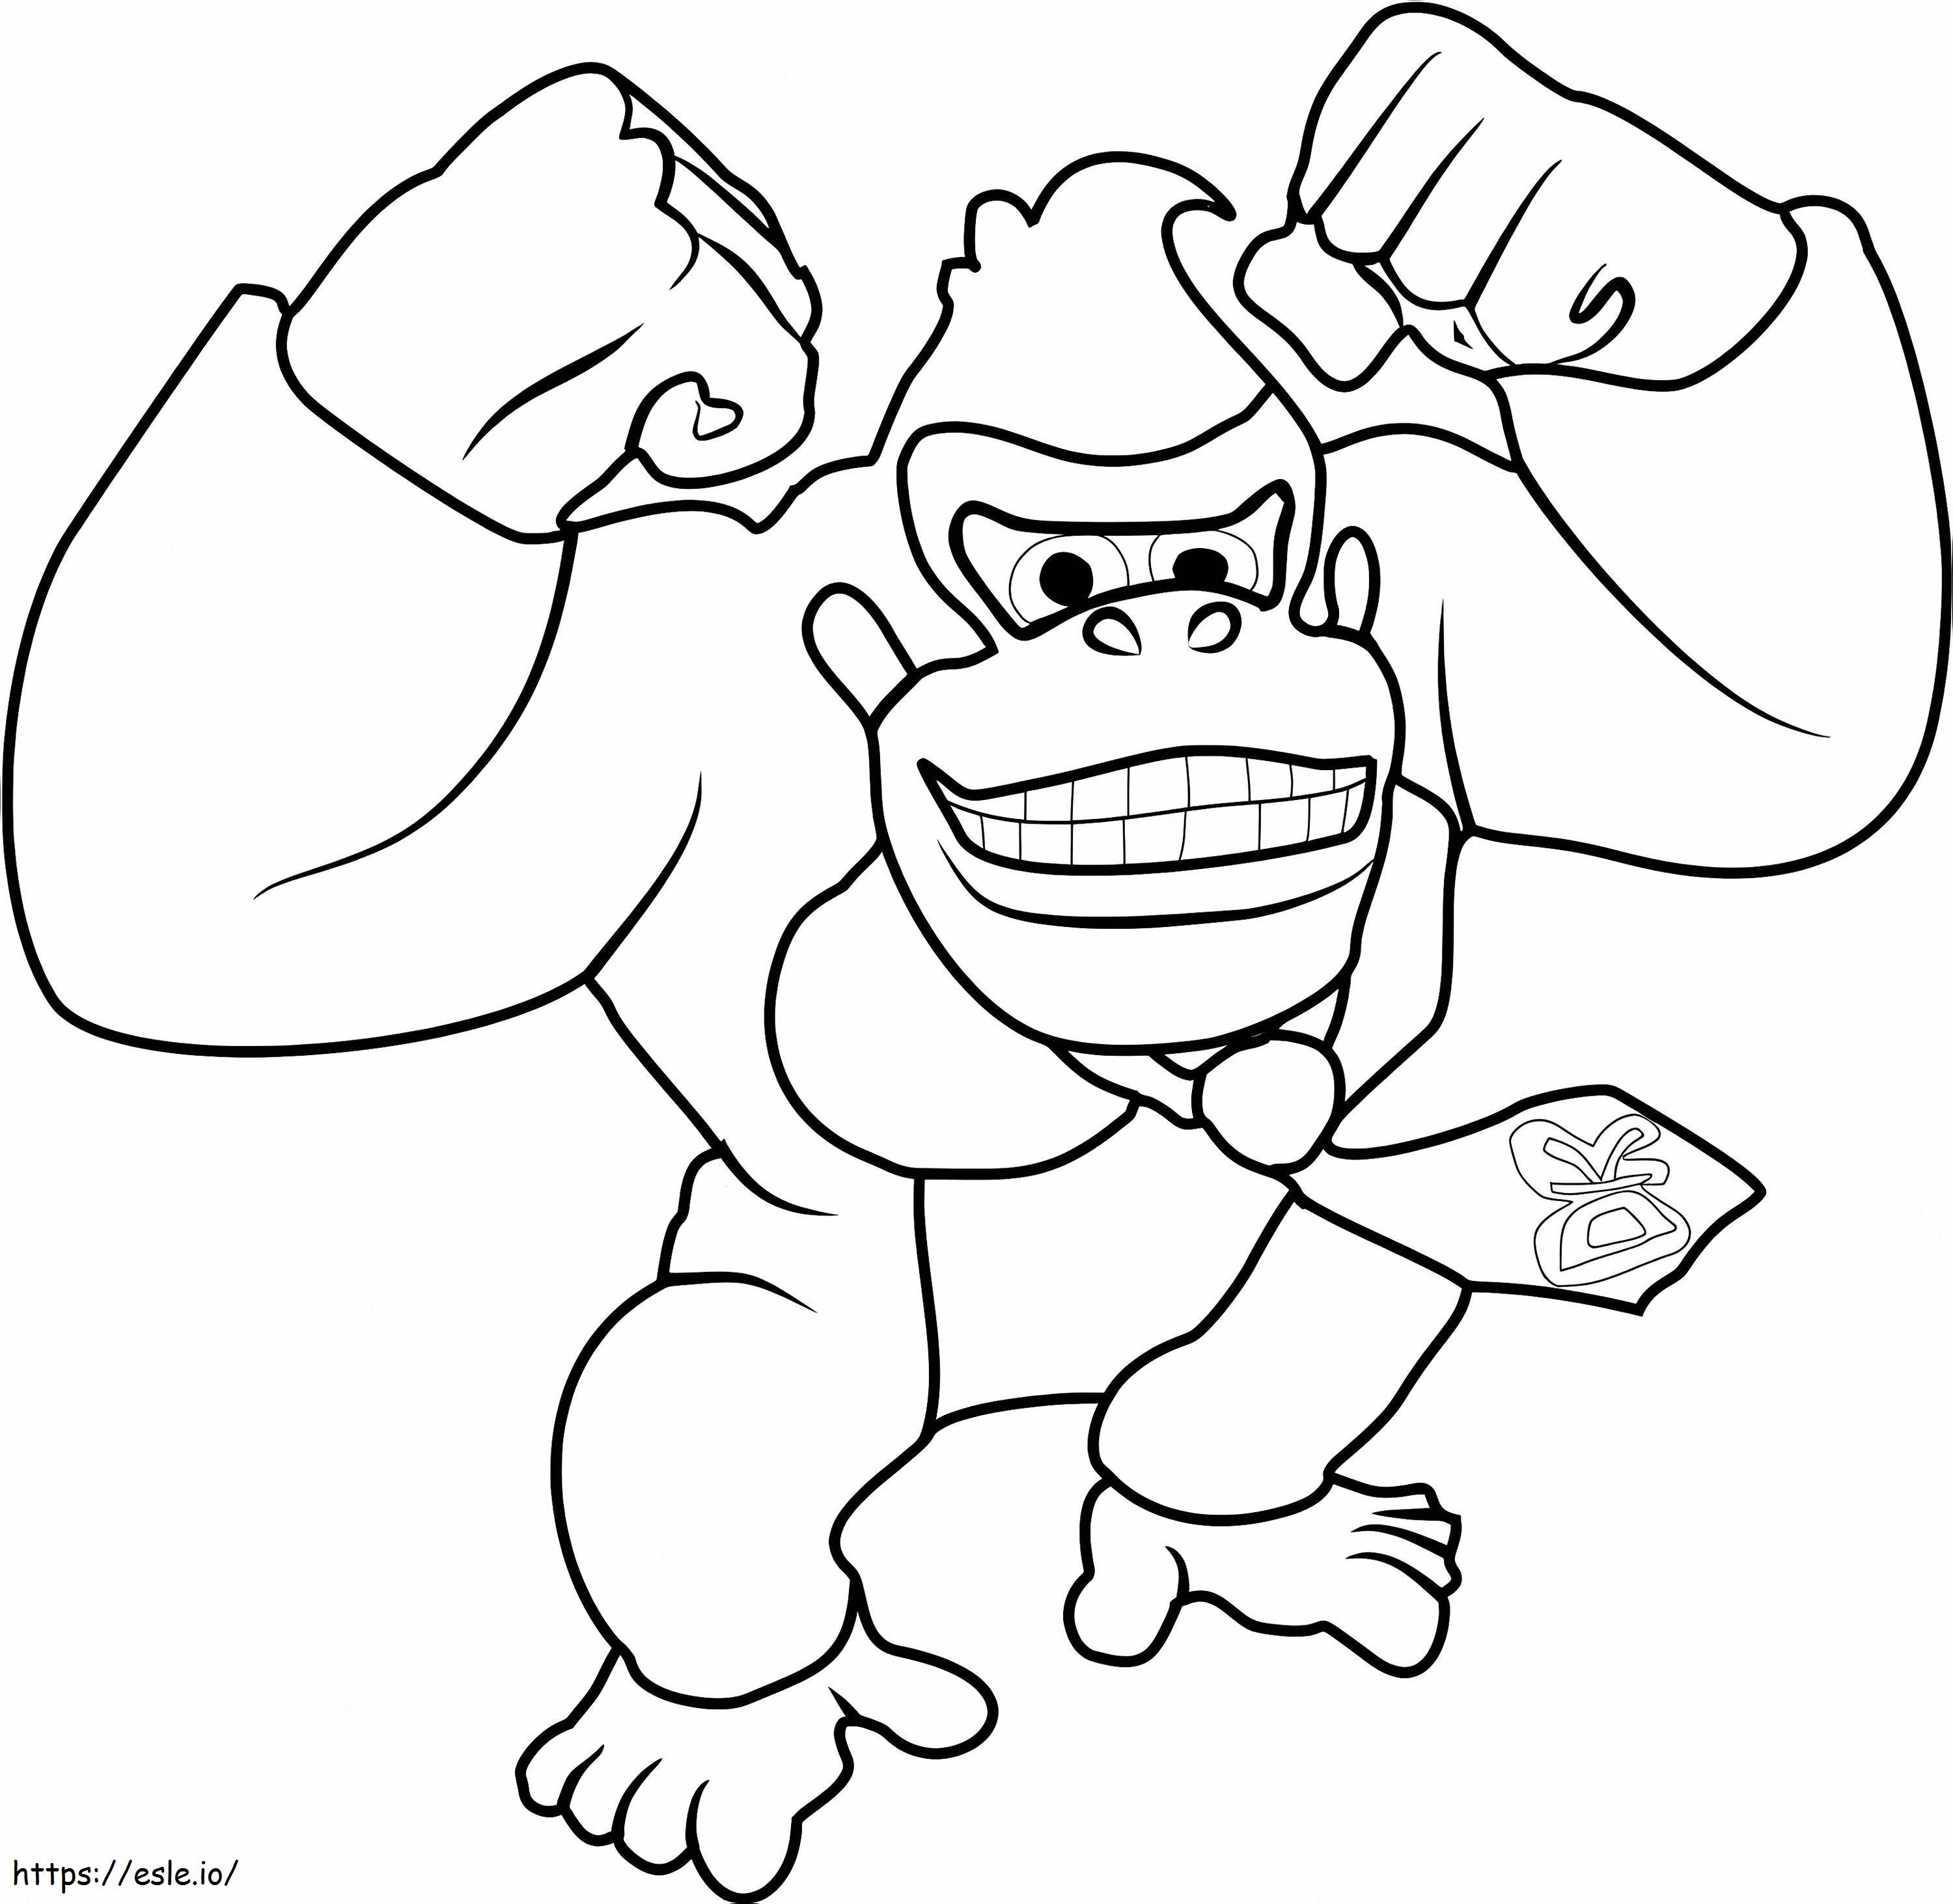 Coloriage Super Mario Donkey Kong à imprimer dessin